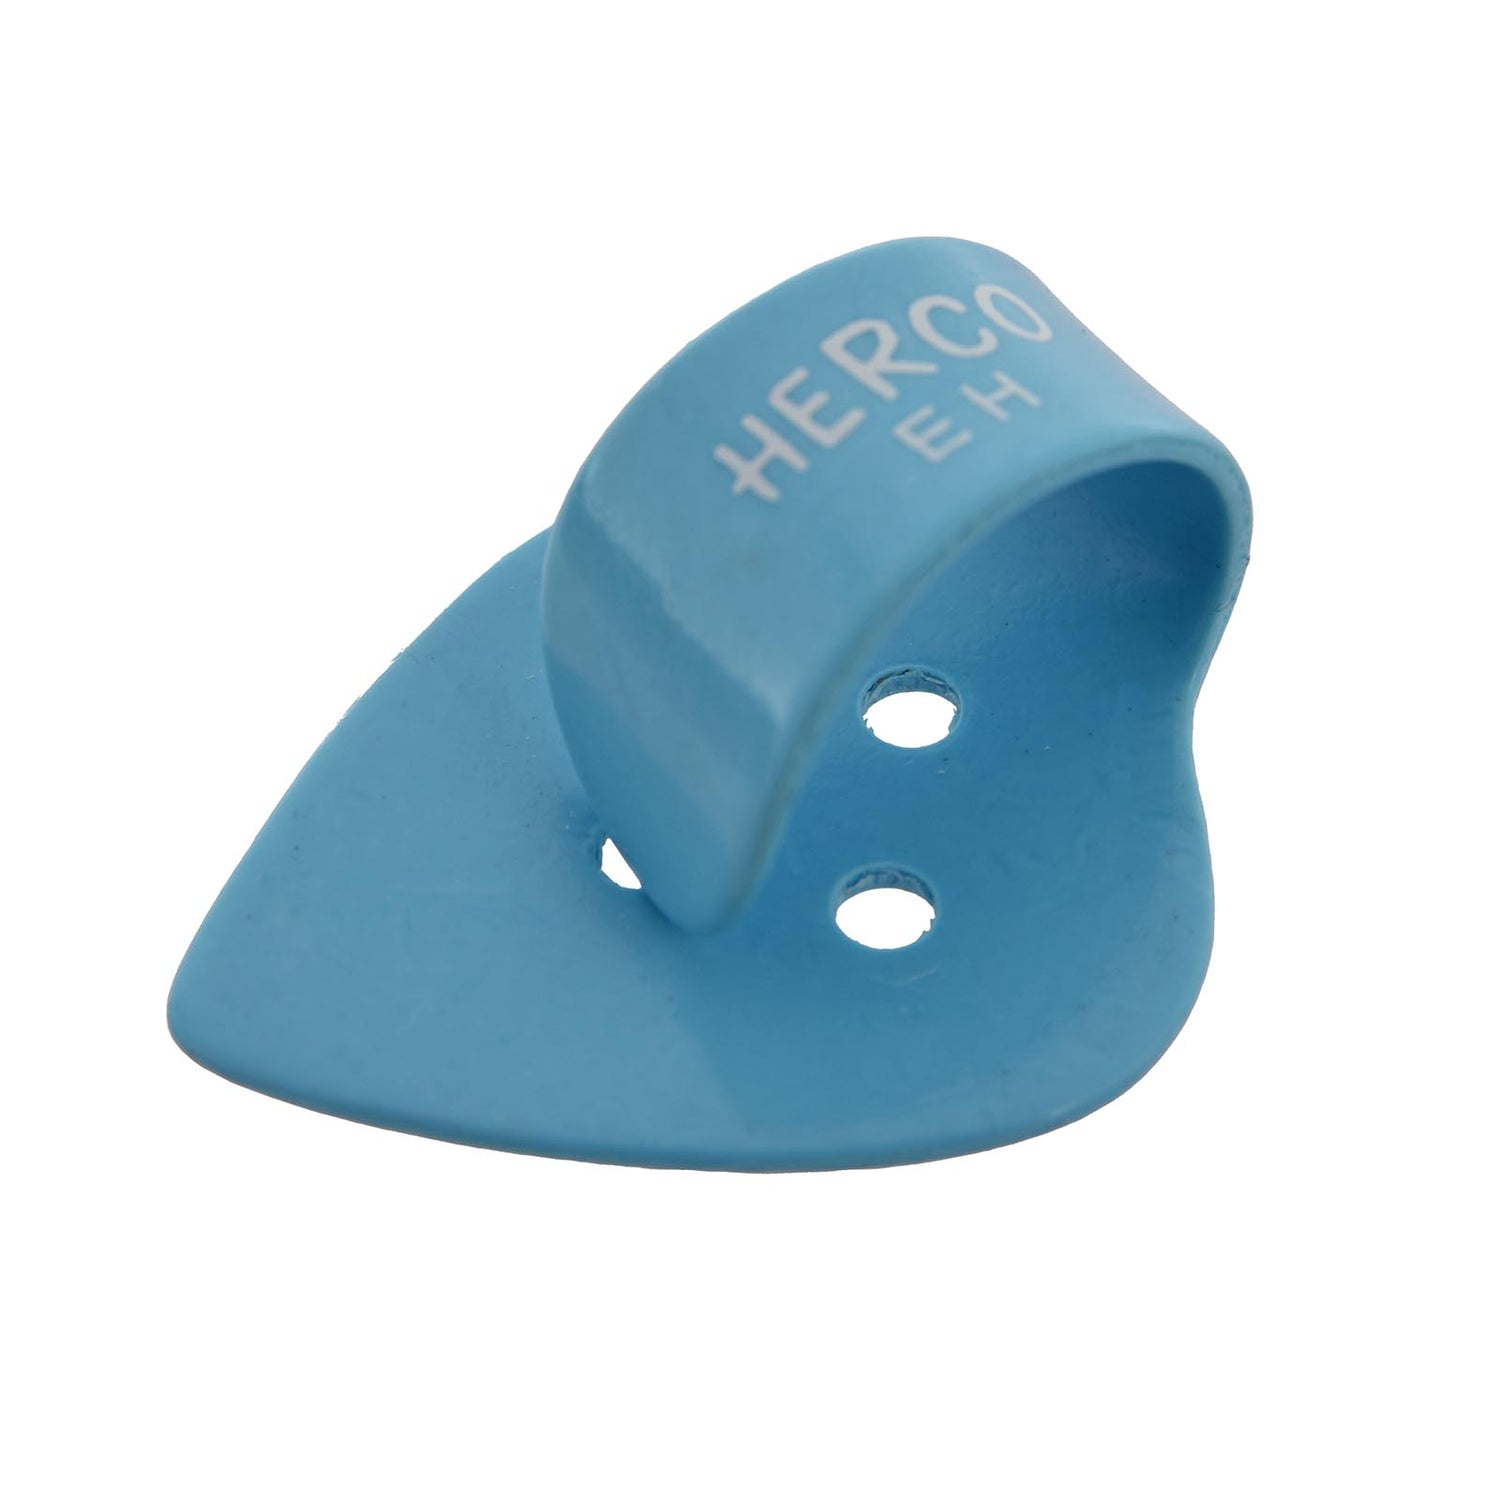 Top of Herco Extra Heavy Flatpick/Thumbpick